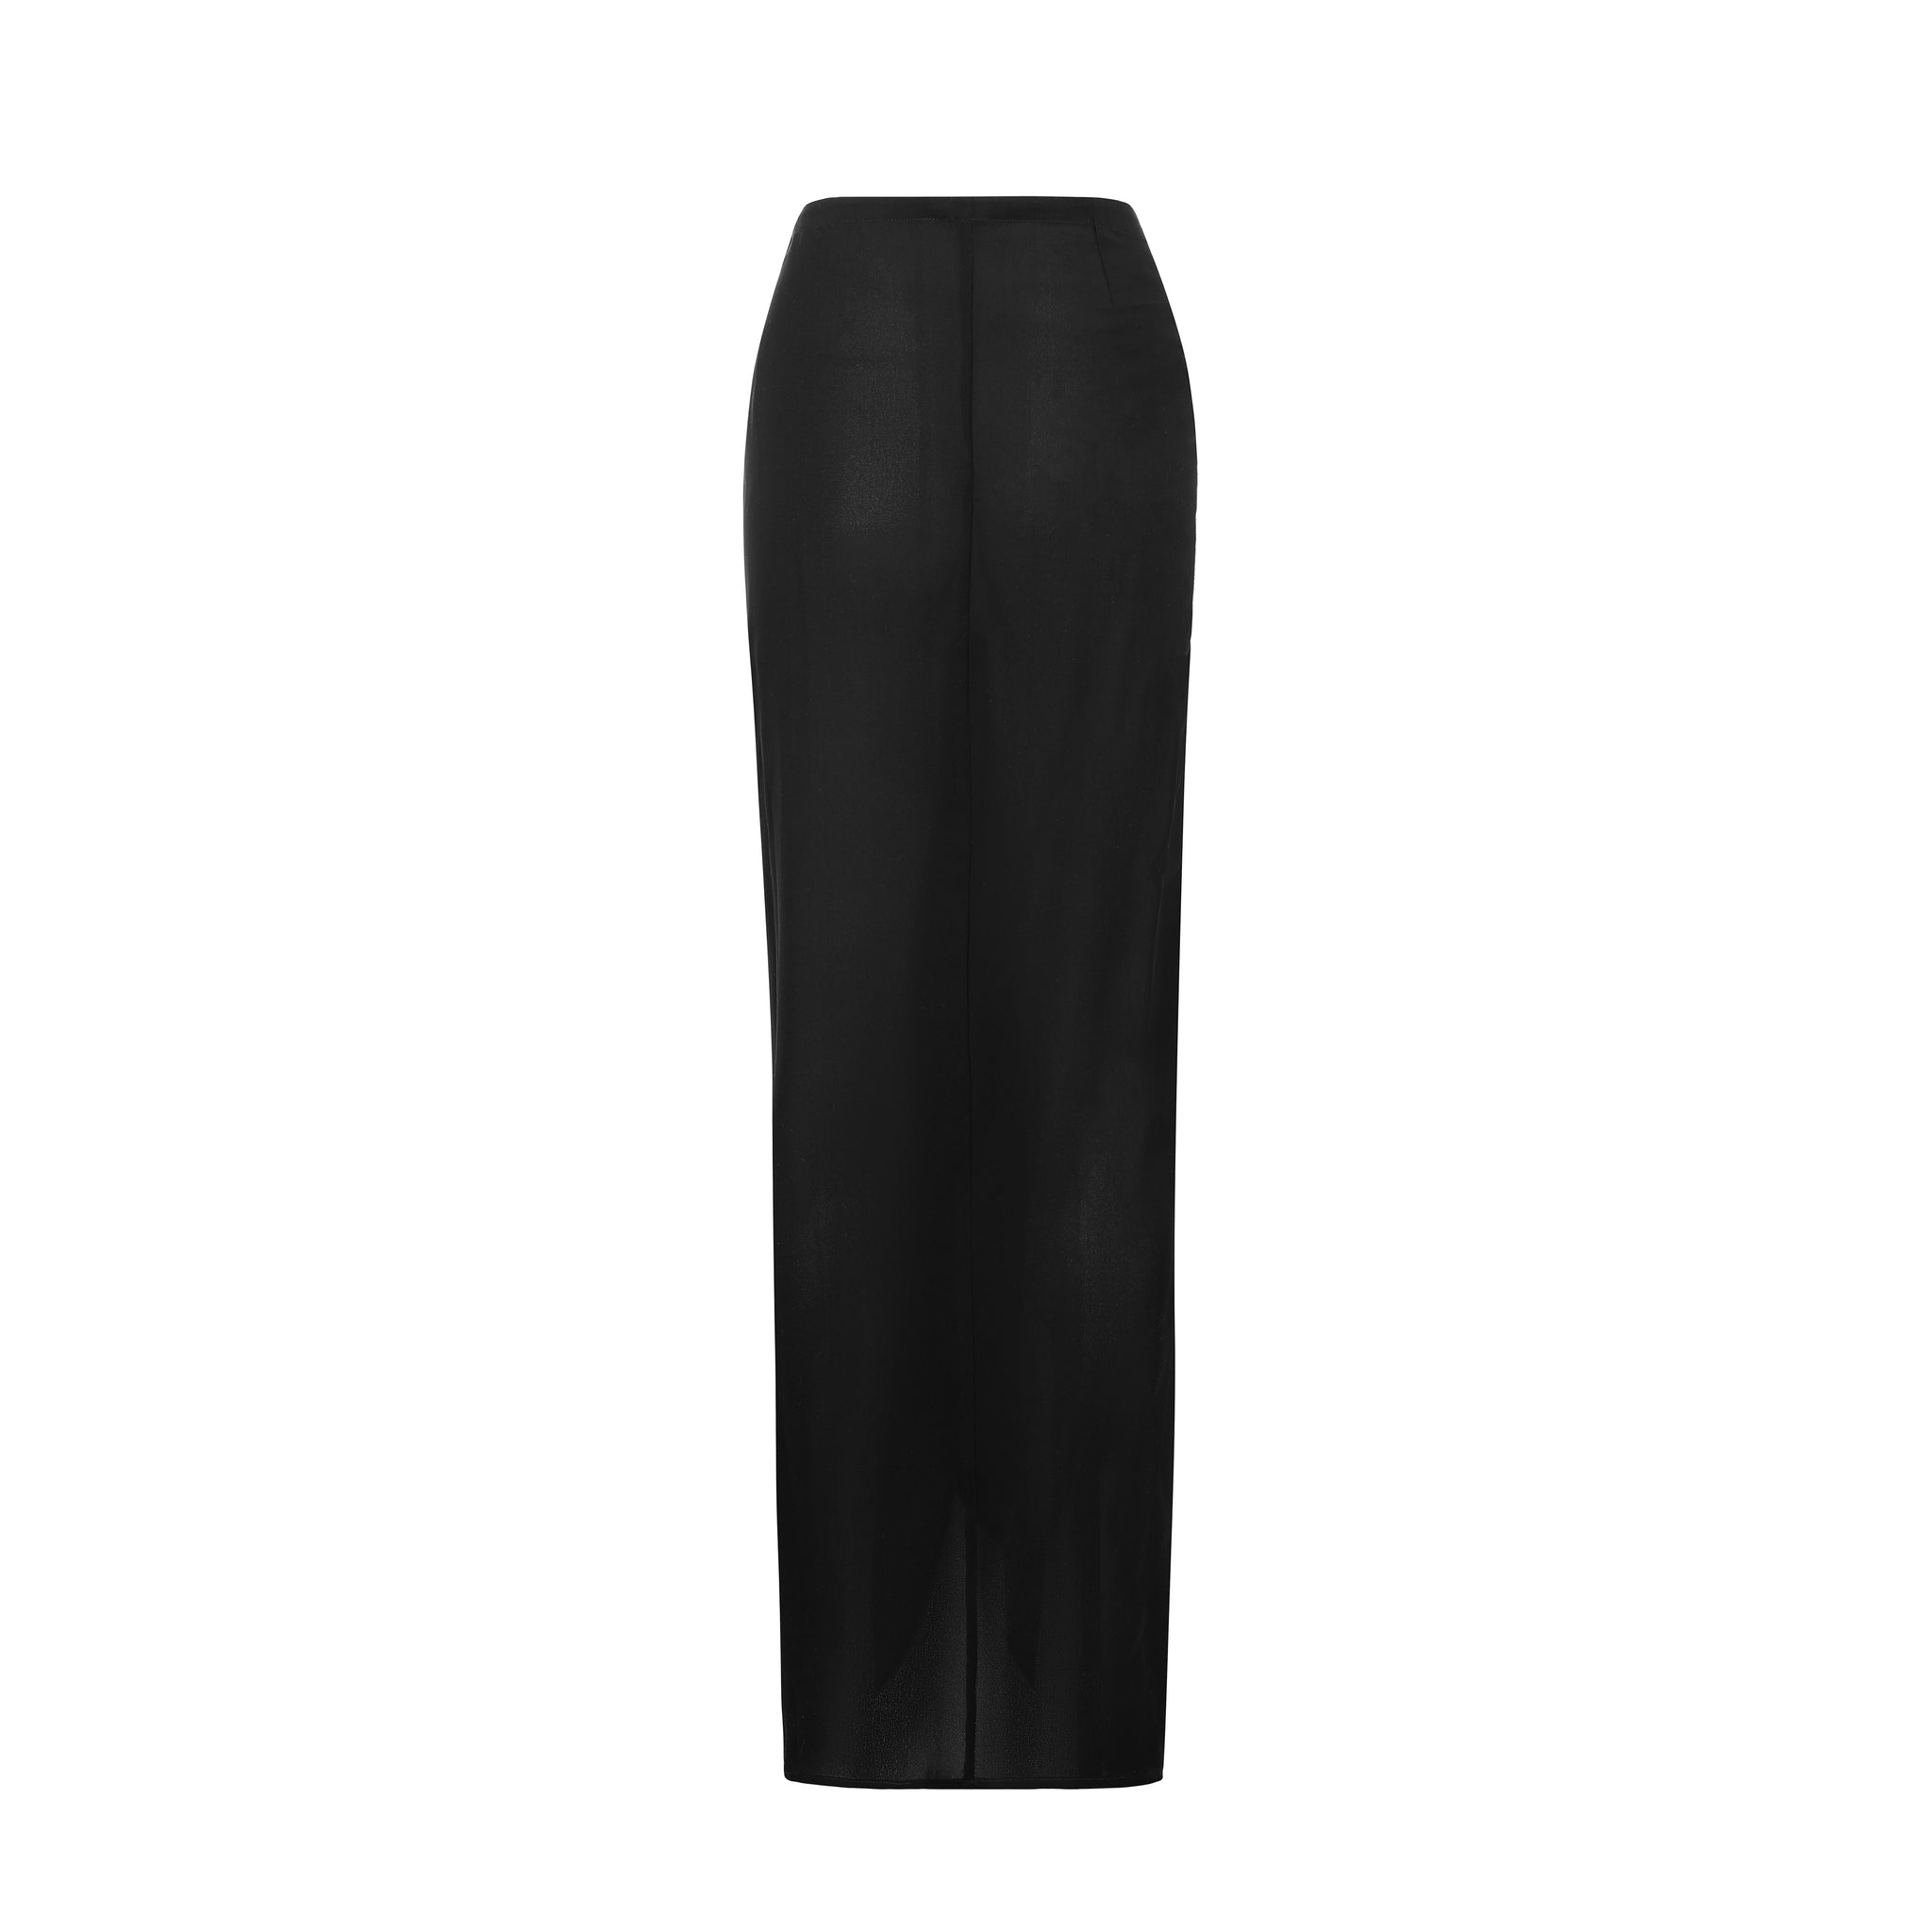 New Twisted Skirt - Black